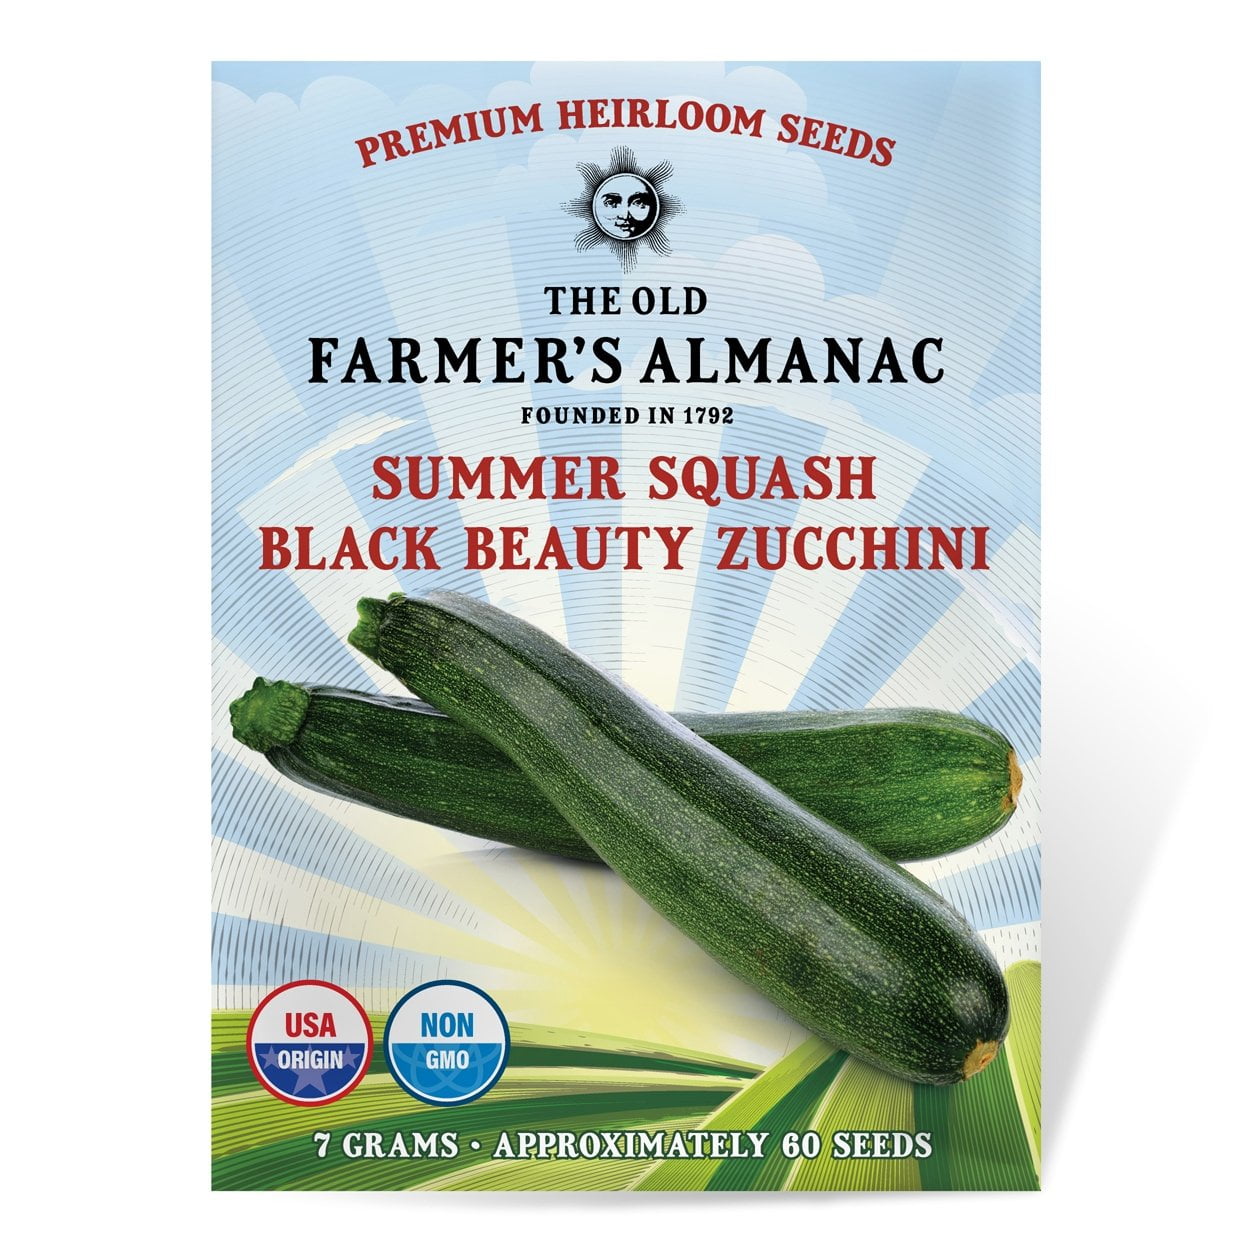 The Old Farmer's Almanac Heirloom Summer Squash Seeds Black Beauty Zucchini Approx 60 Seeds